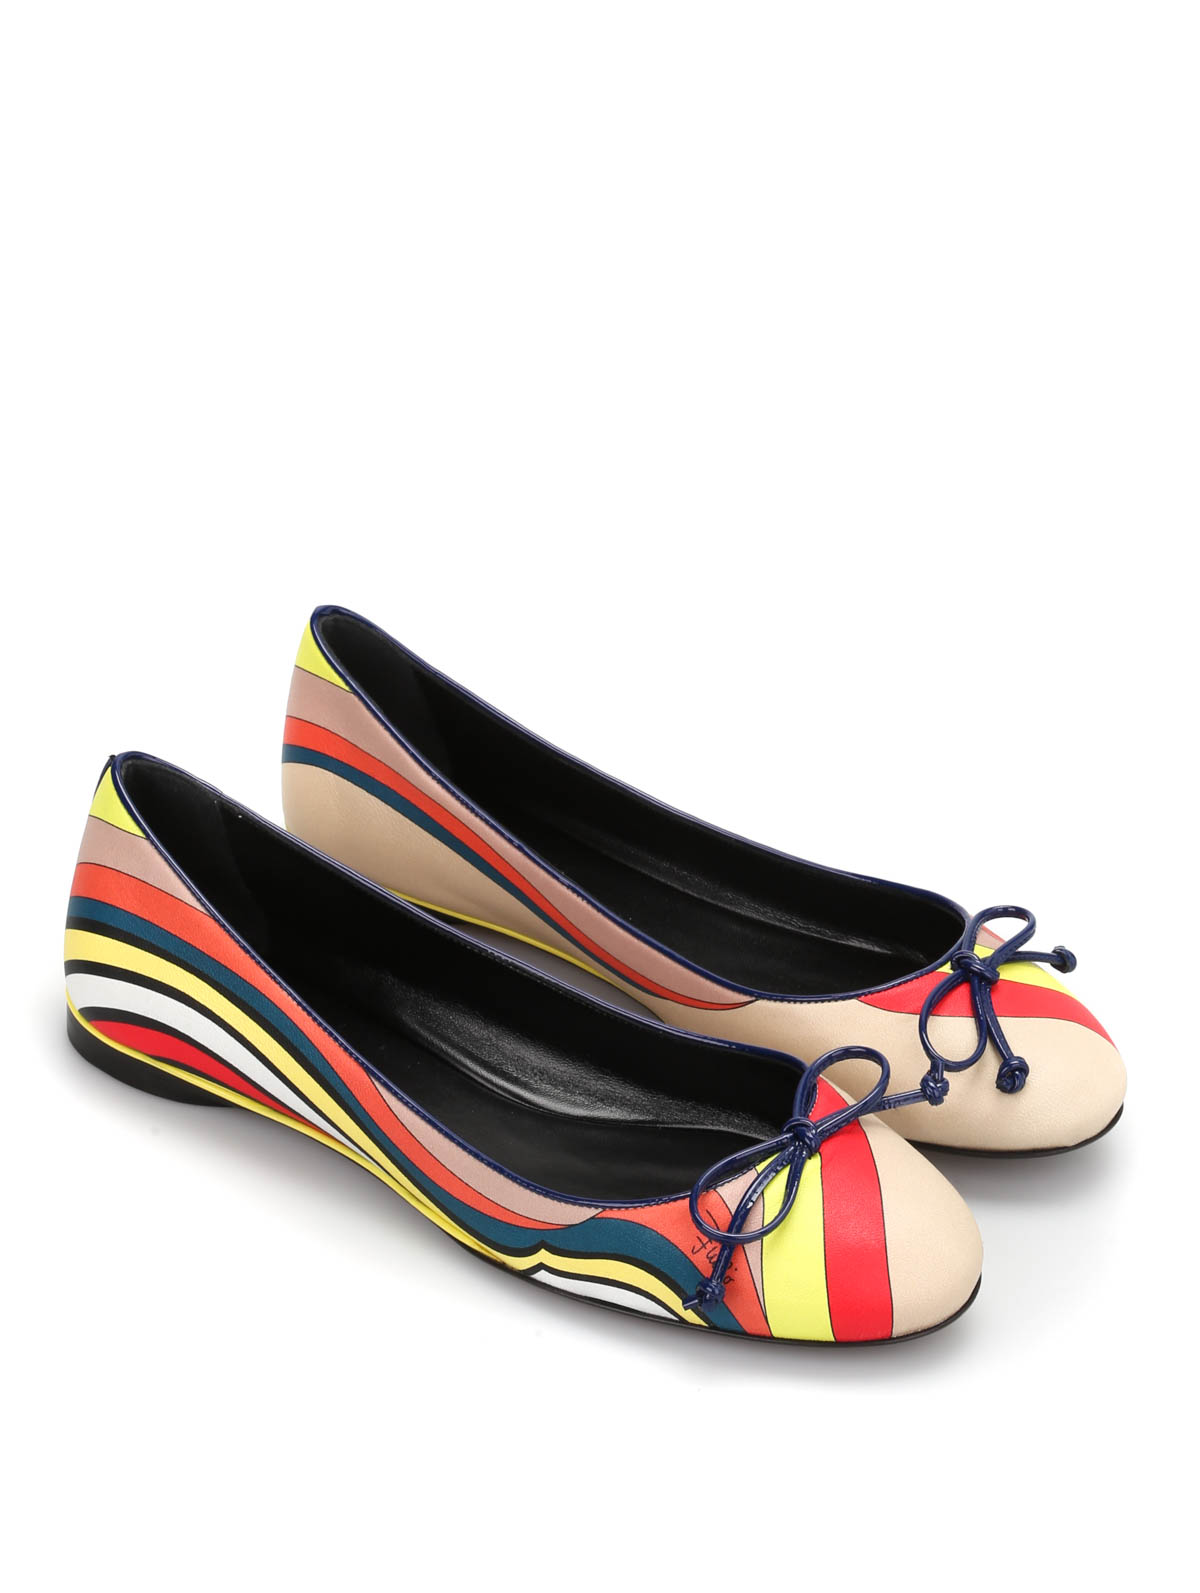 Flat shoes Emilio Pucci - Printed leather flat shoes - 56CE03L75